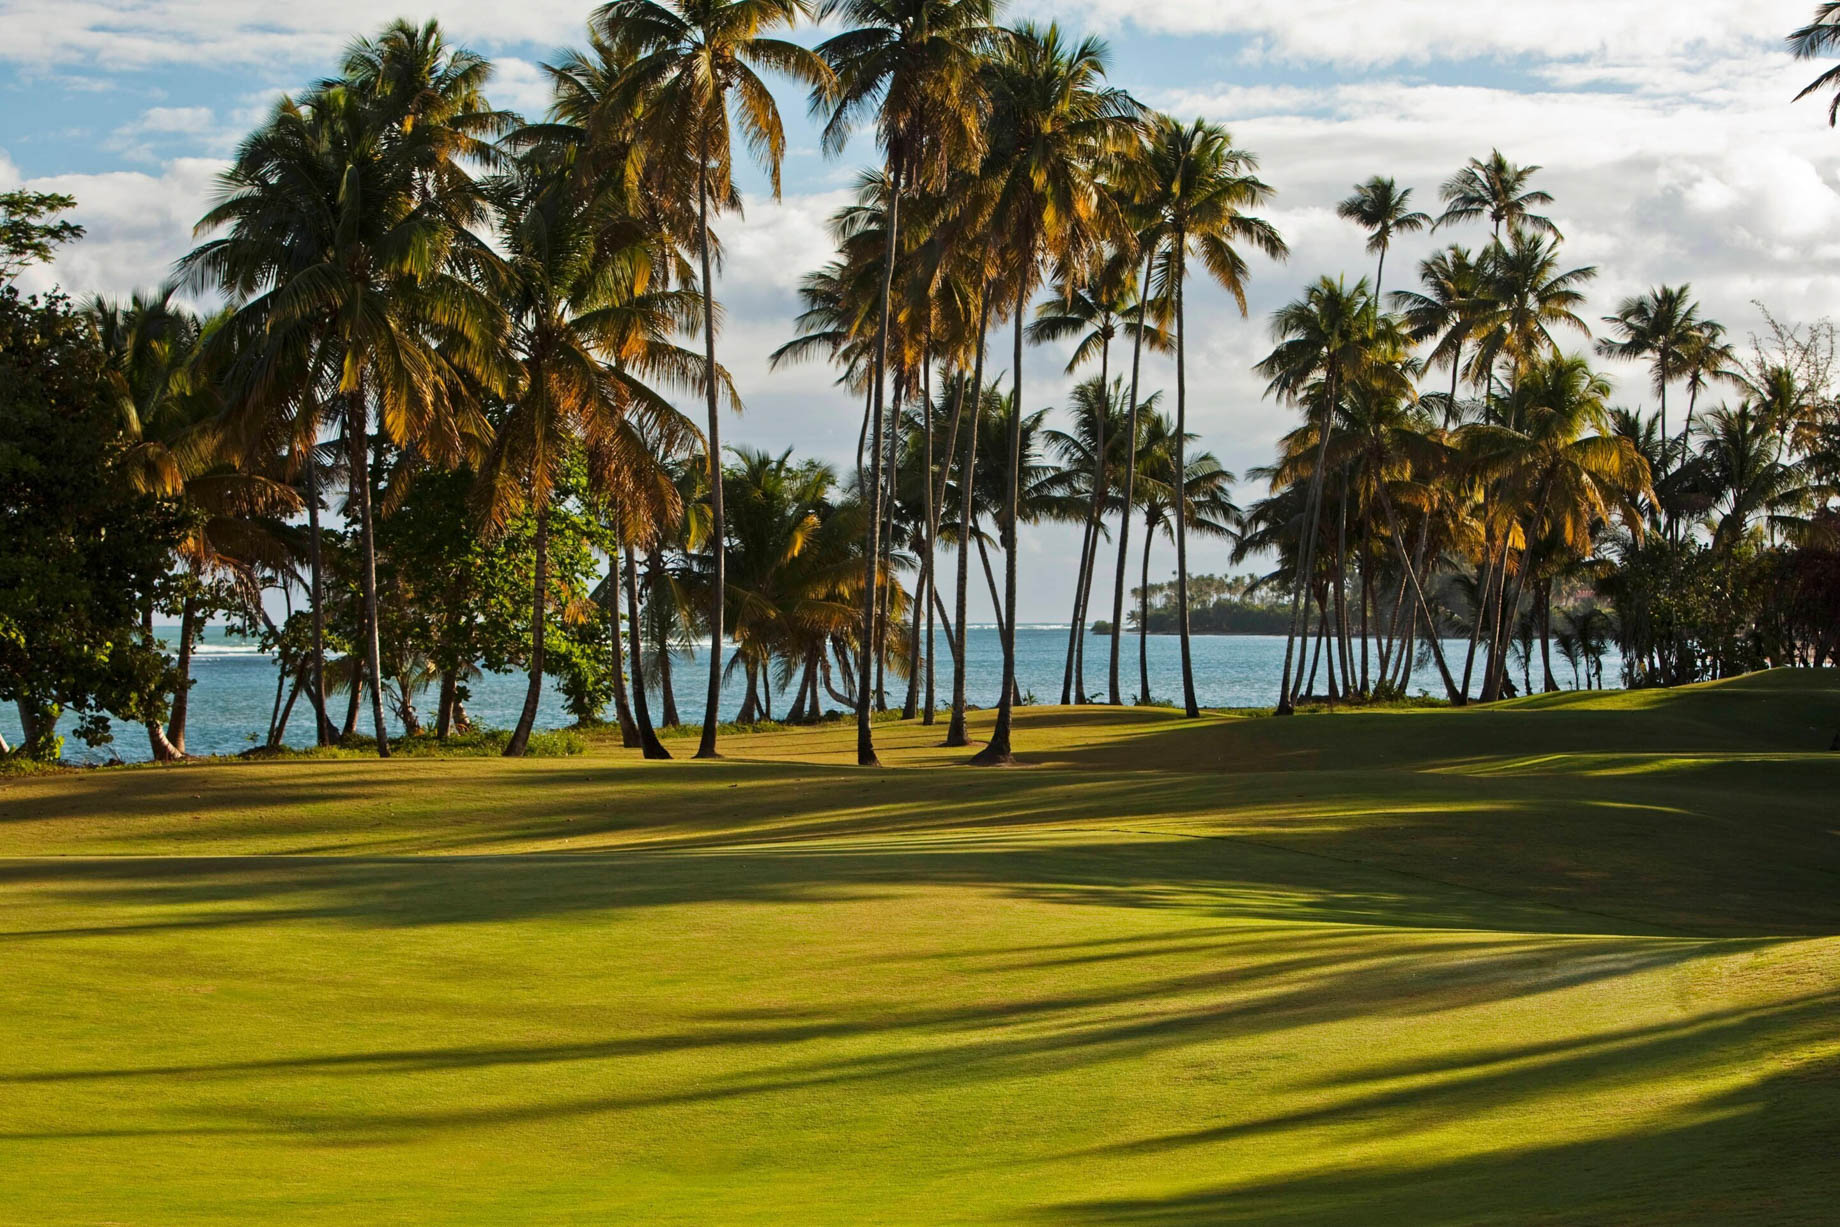 The St. Regis Bahia Beach Resort - Rio Grande, Puerto Rico - Seaside Golf Course